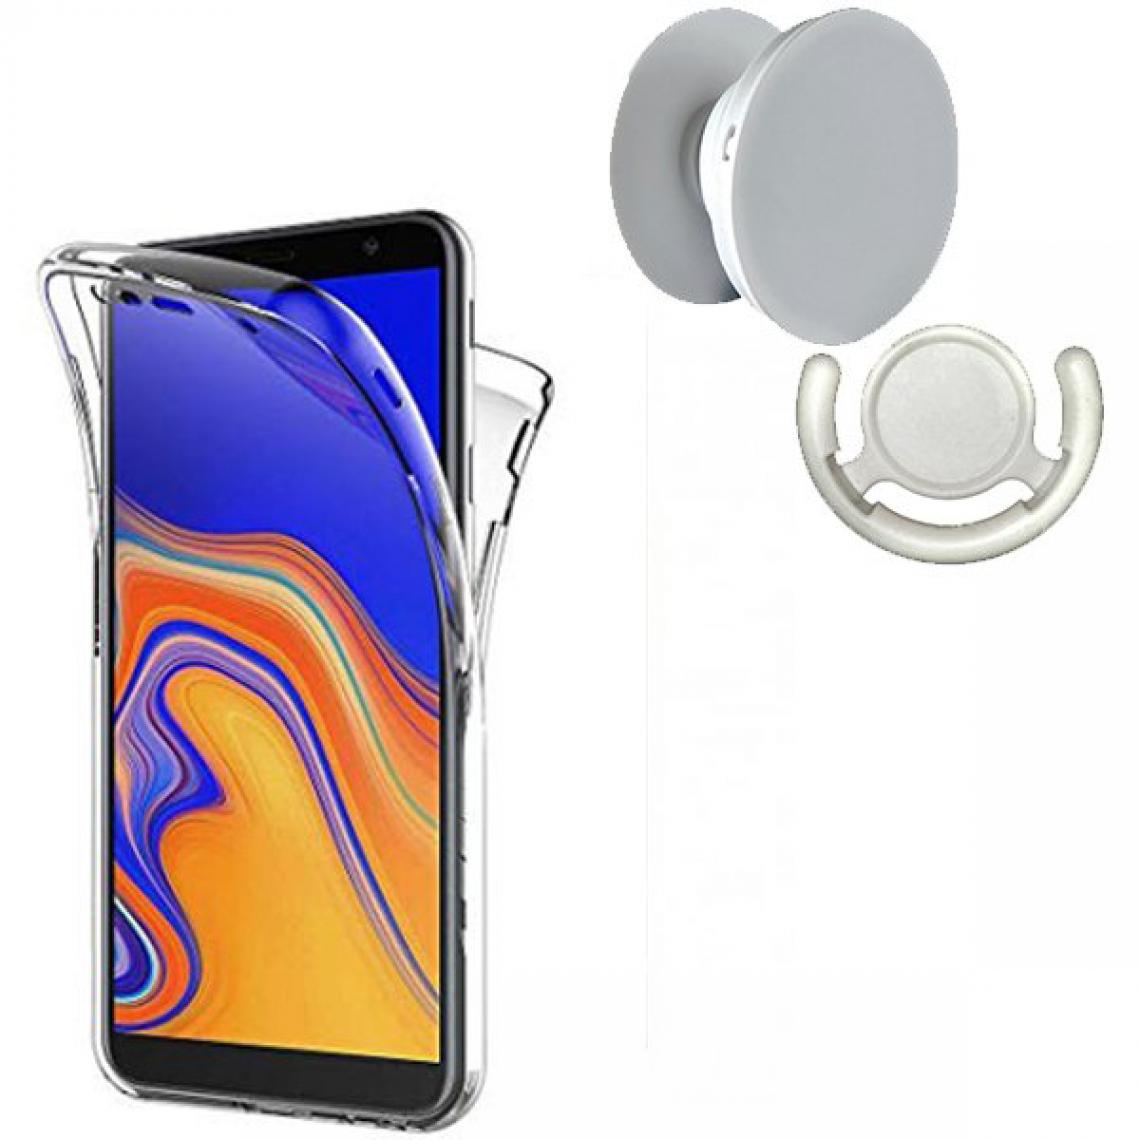 Phonecare - Kit Coque 3x1 360° Impact Protection + 1 PopSocket + 1 Support PopSocket Blanc - Impact Protection - Samsung J4 Plus - Coque, étui smartphone